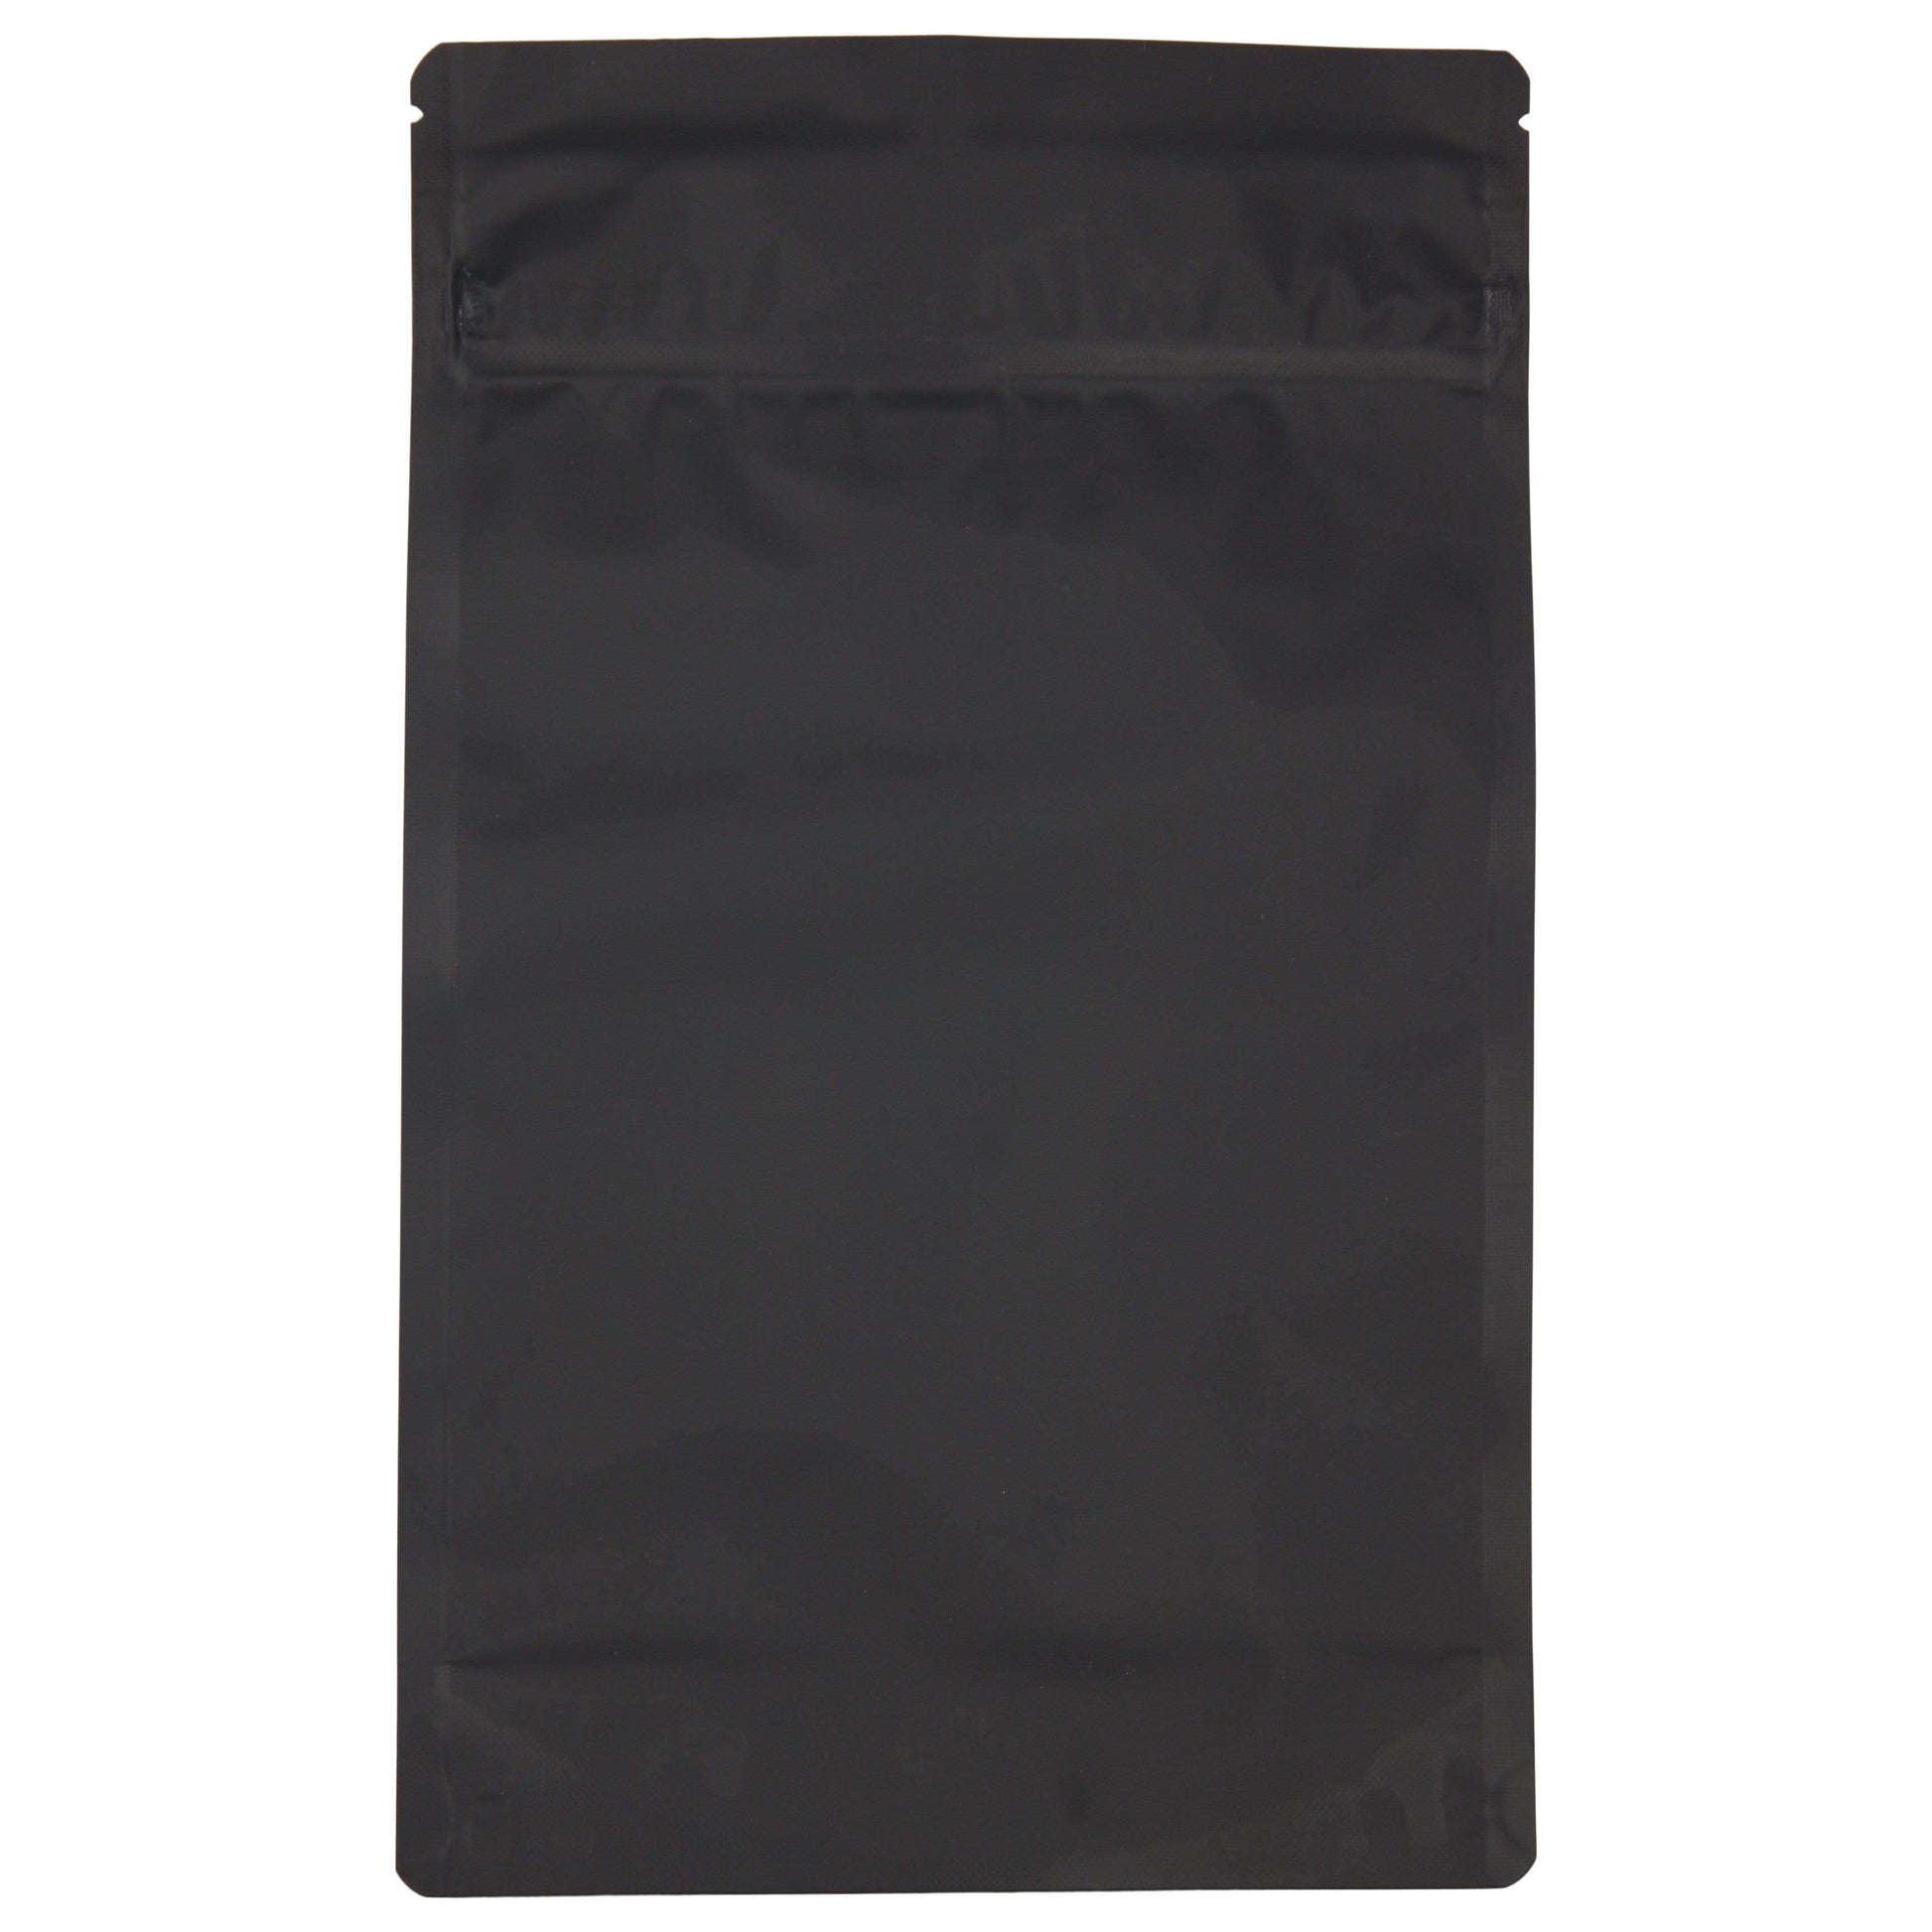 Matte Black Bag King Child-Resistant Opaque Bag (1oz) 6" x 9.8"